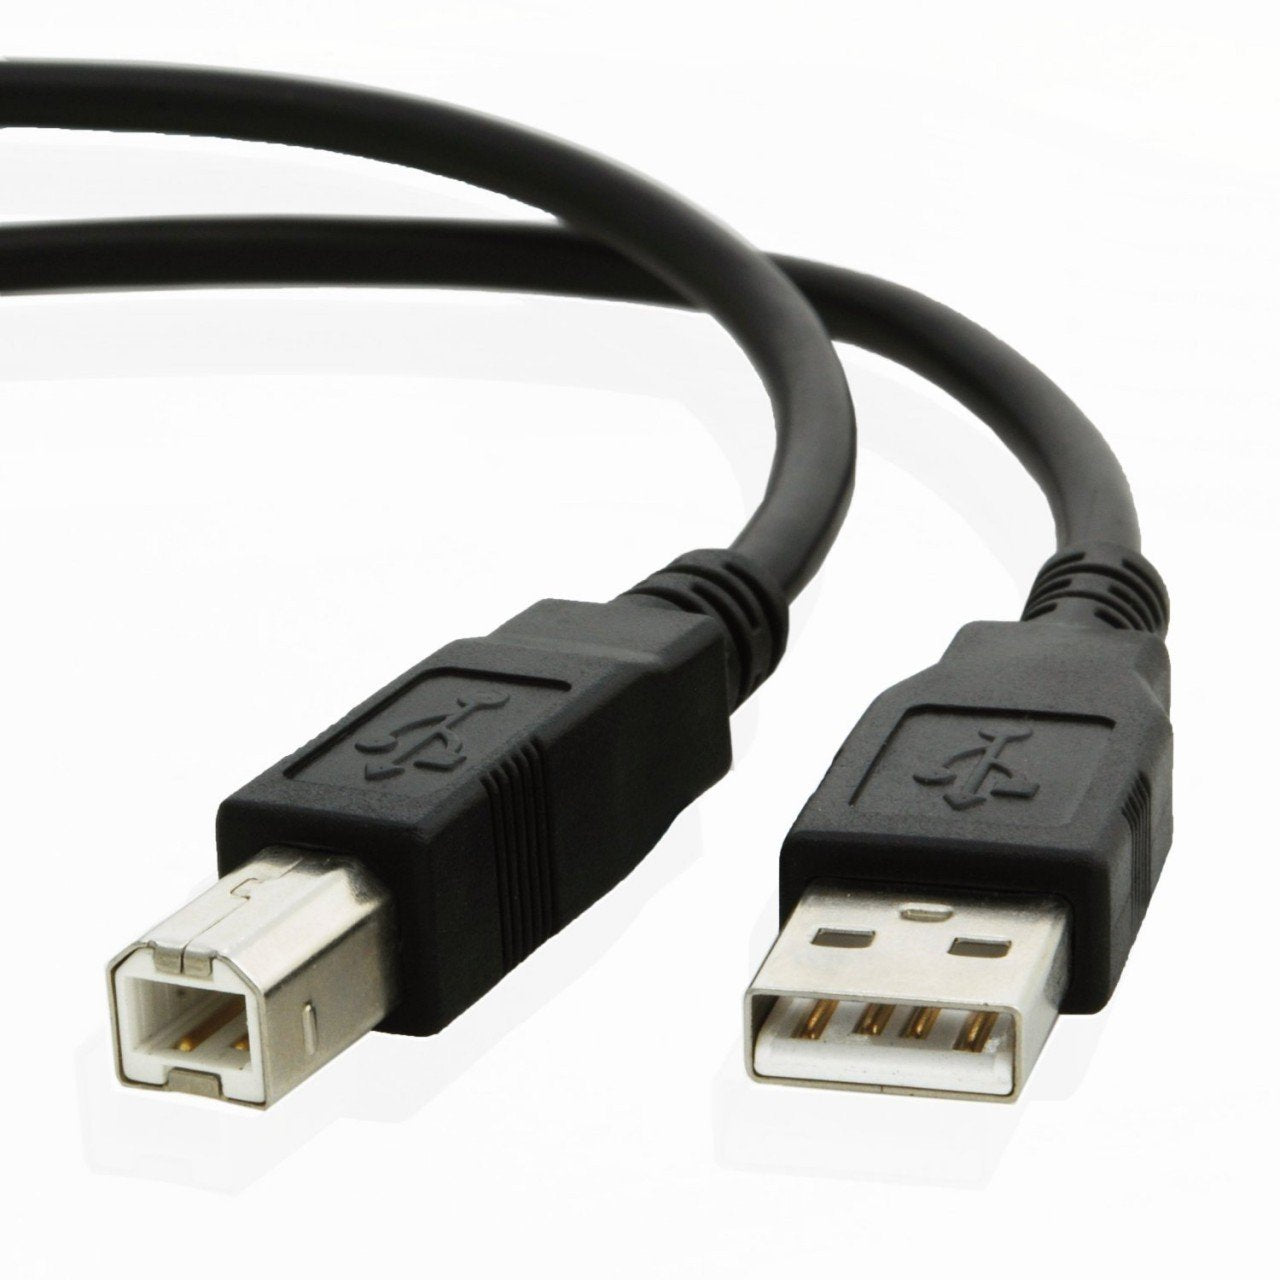 USB cable for Hp LASERJET PRO M426dw